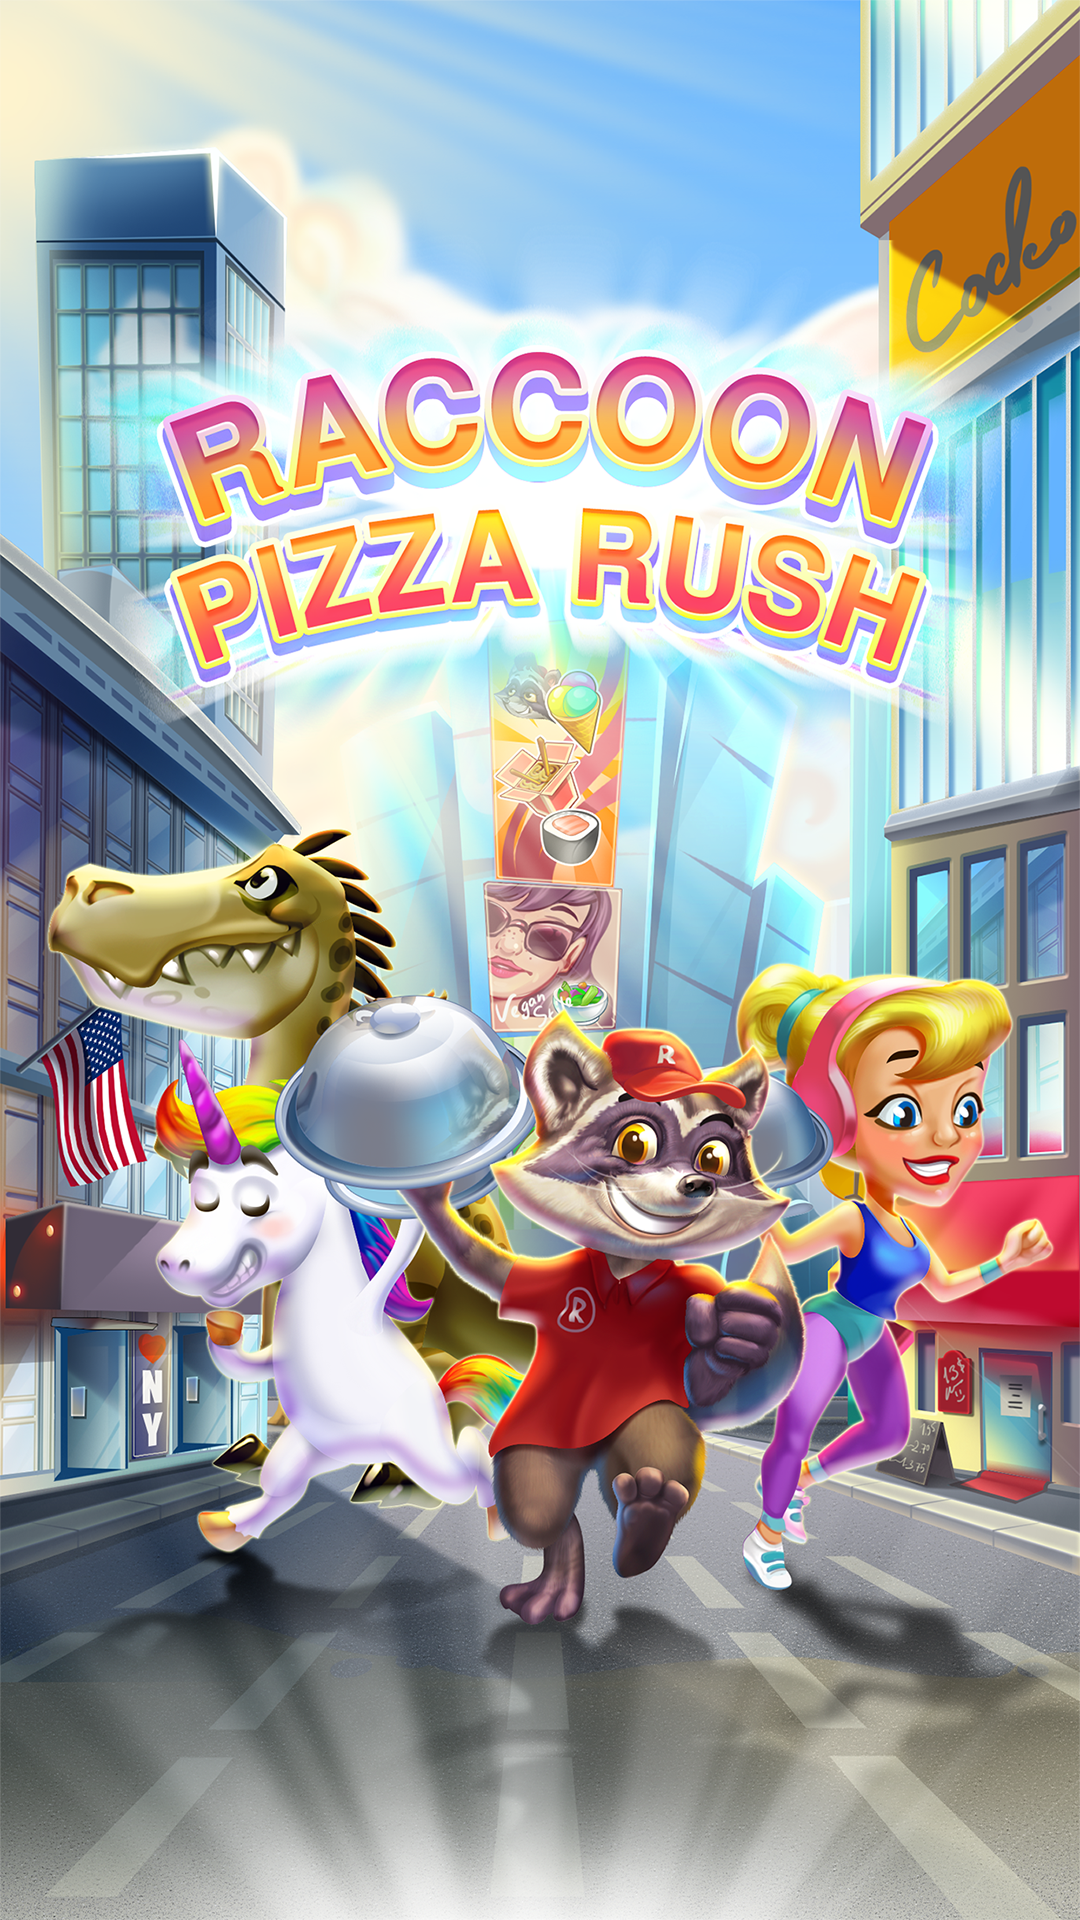 Screenshot 1 of Raccoon Pizza Rush 1.0.8